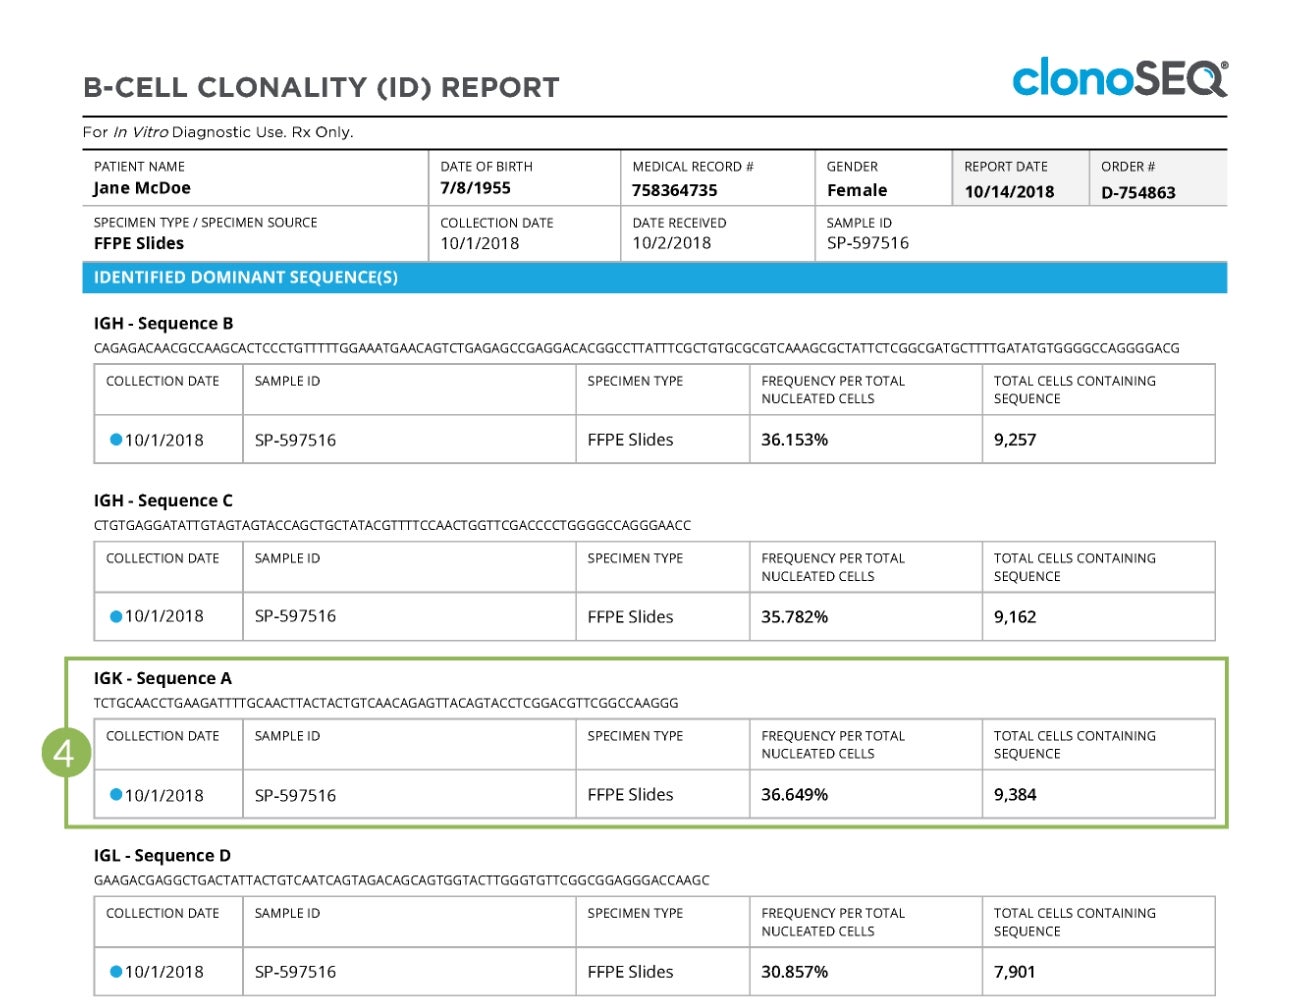 A sample clonoSEQ Clonality (ID) Report